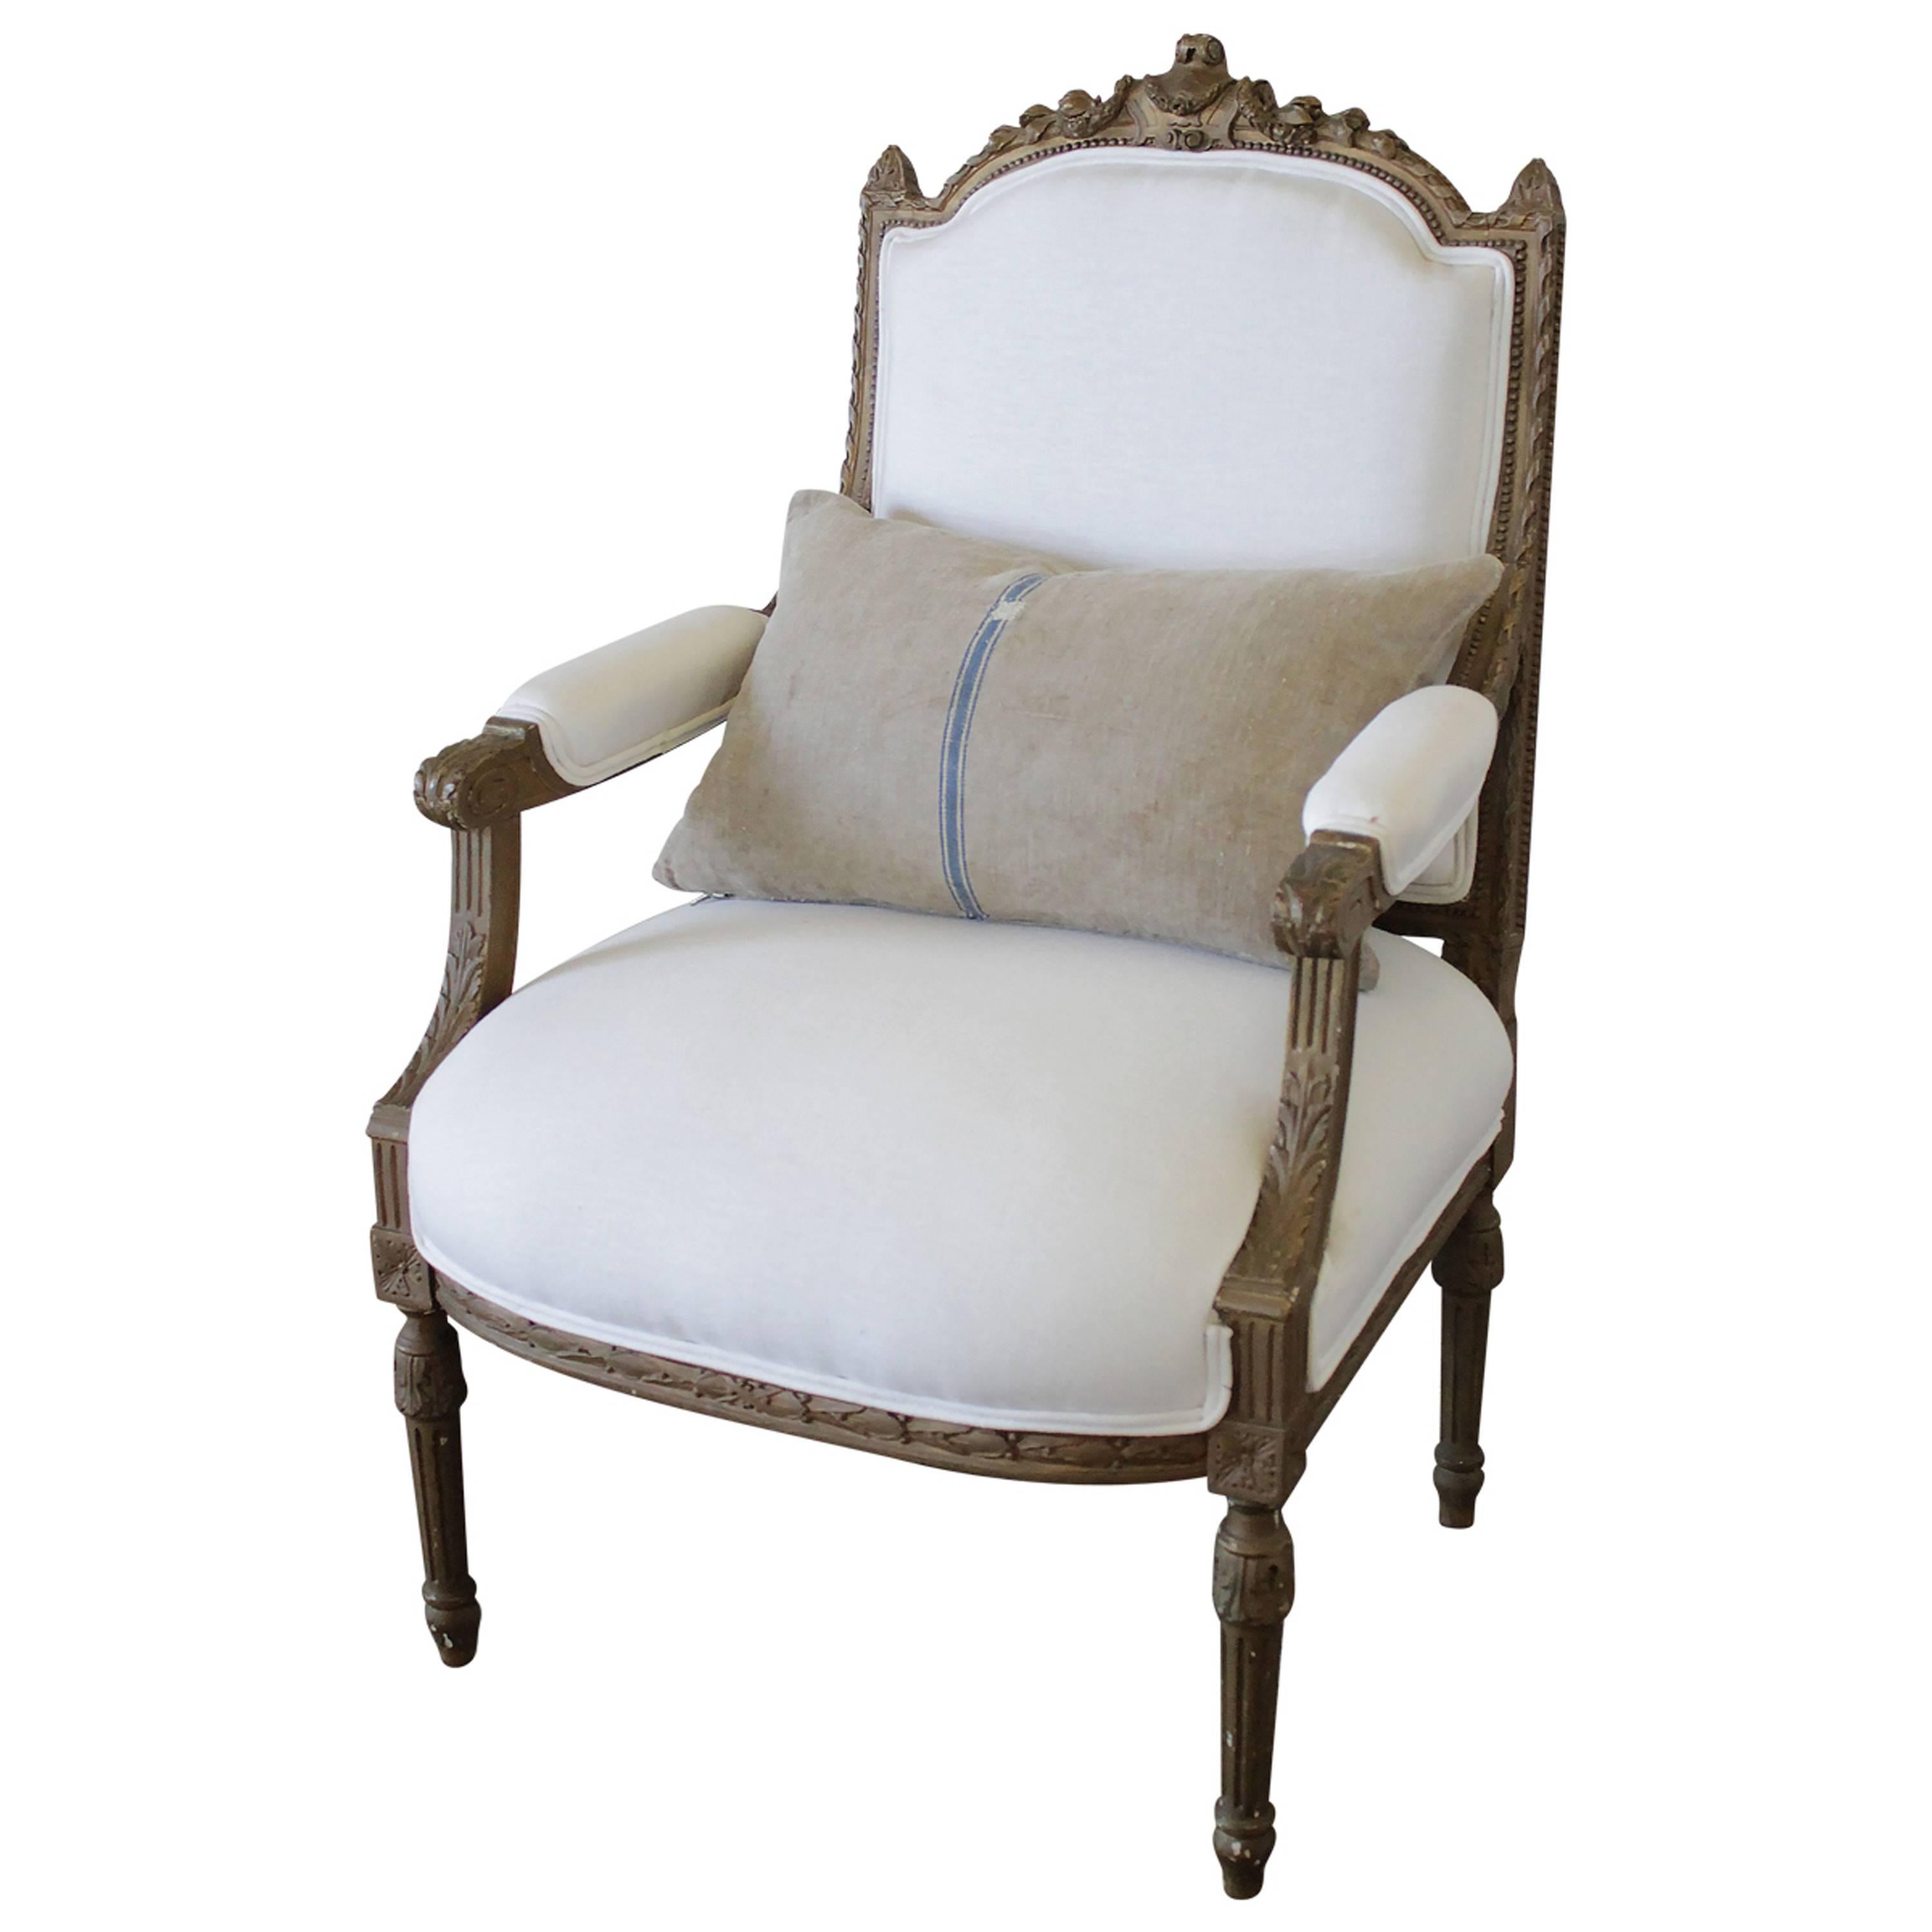 Antique Louis XVI Carved Open Armchair in White Belgian Linen